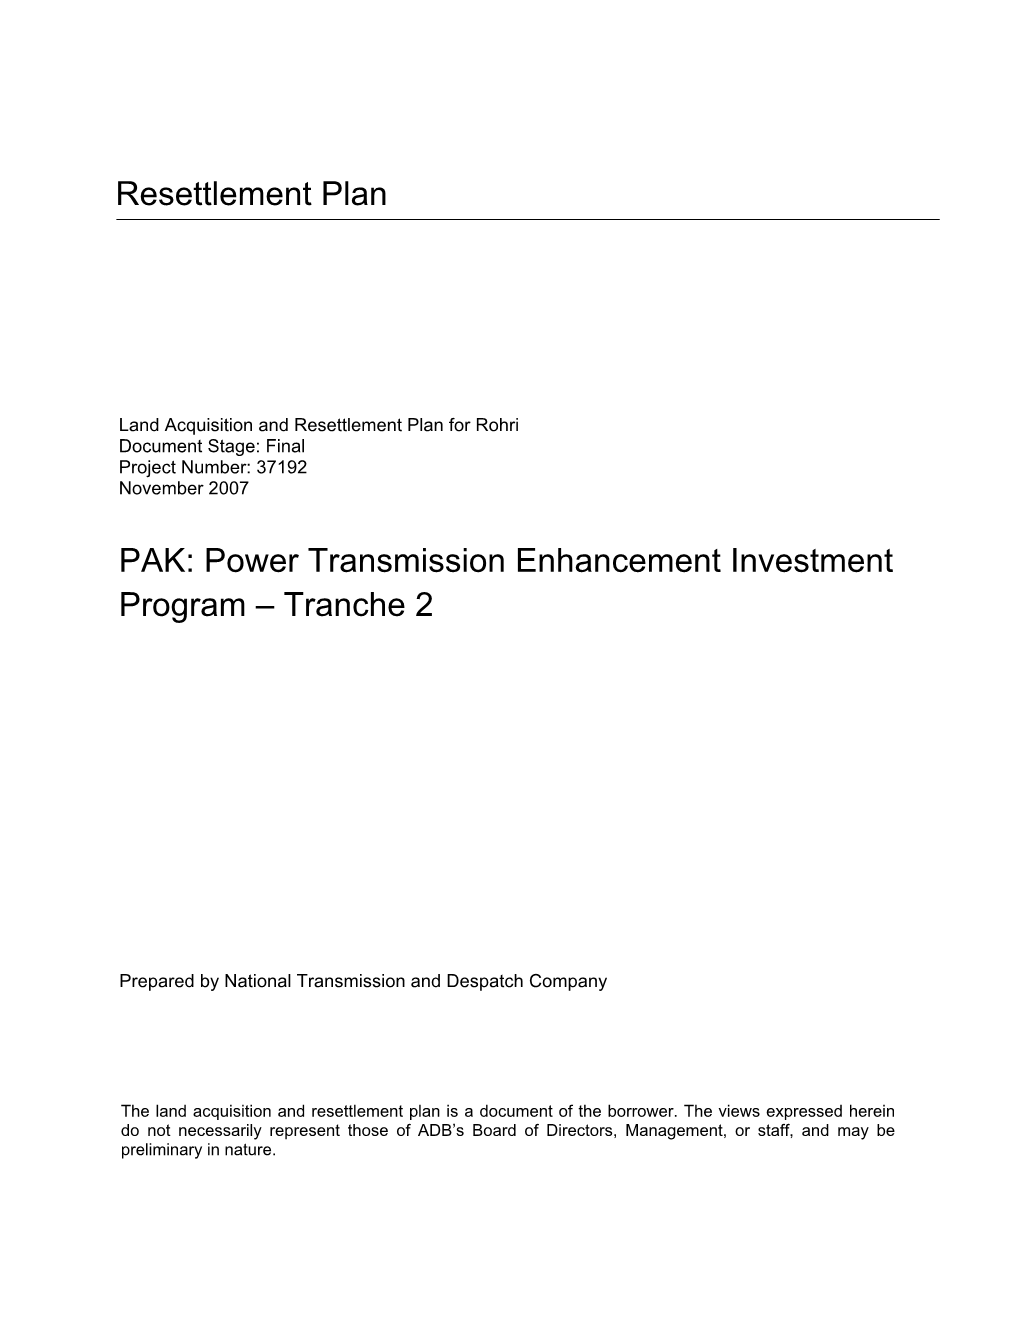 PAK: Power Transmission Enhancement Investment Program – Tranche 2